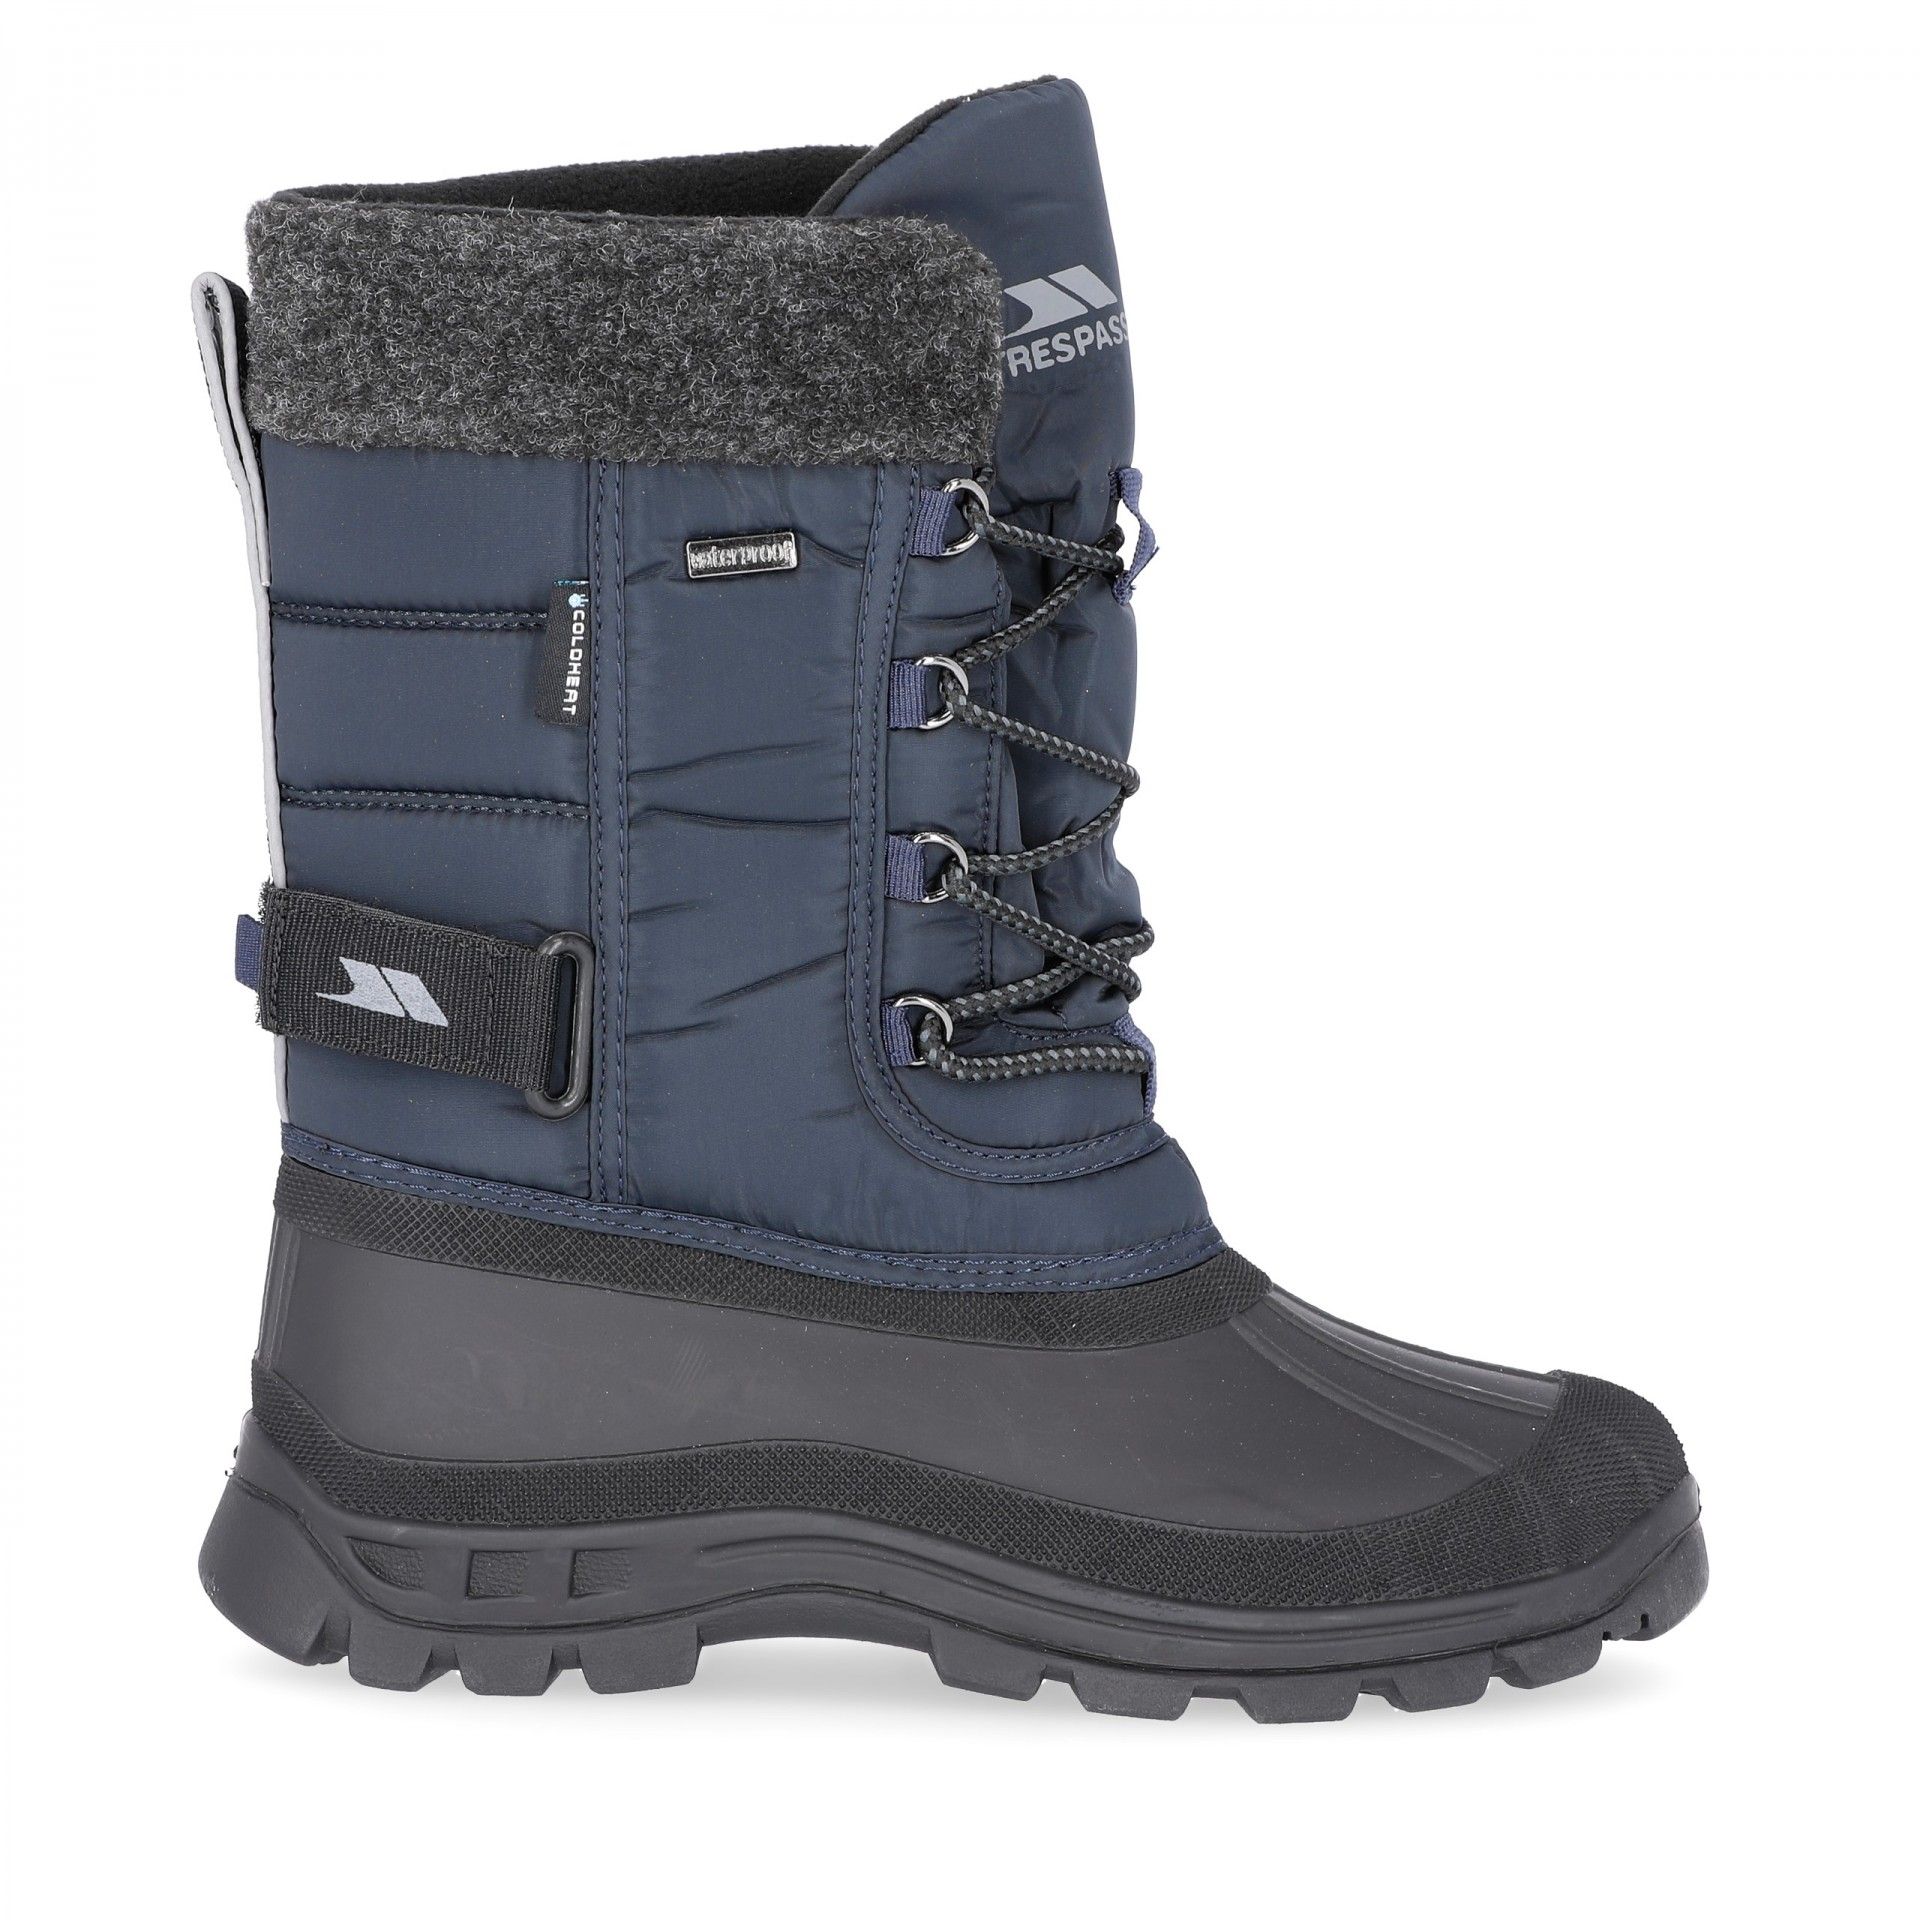 Trespass Strachan II Boys Waterproof Snow Boots Insulated in Black & Navy